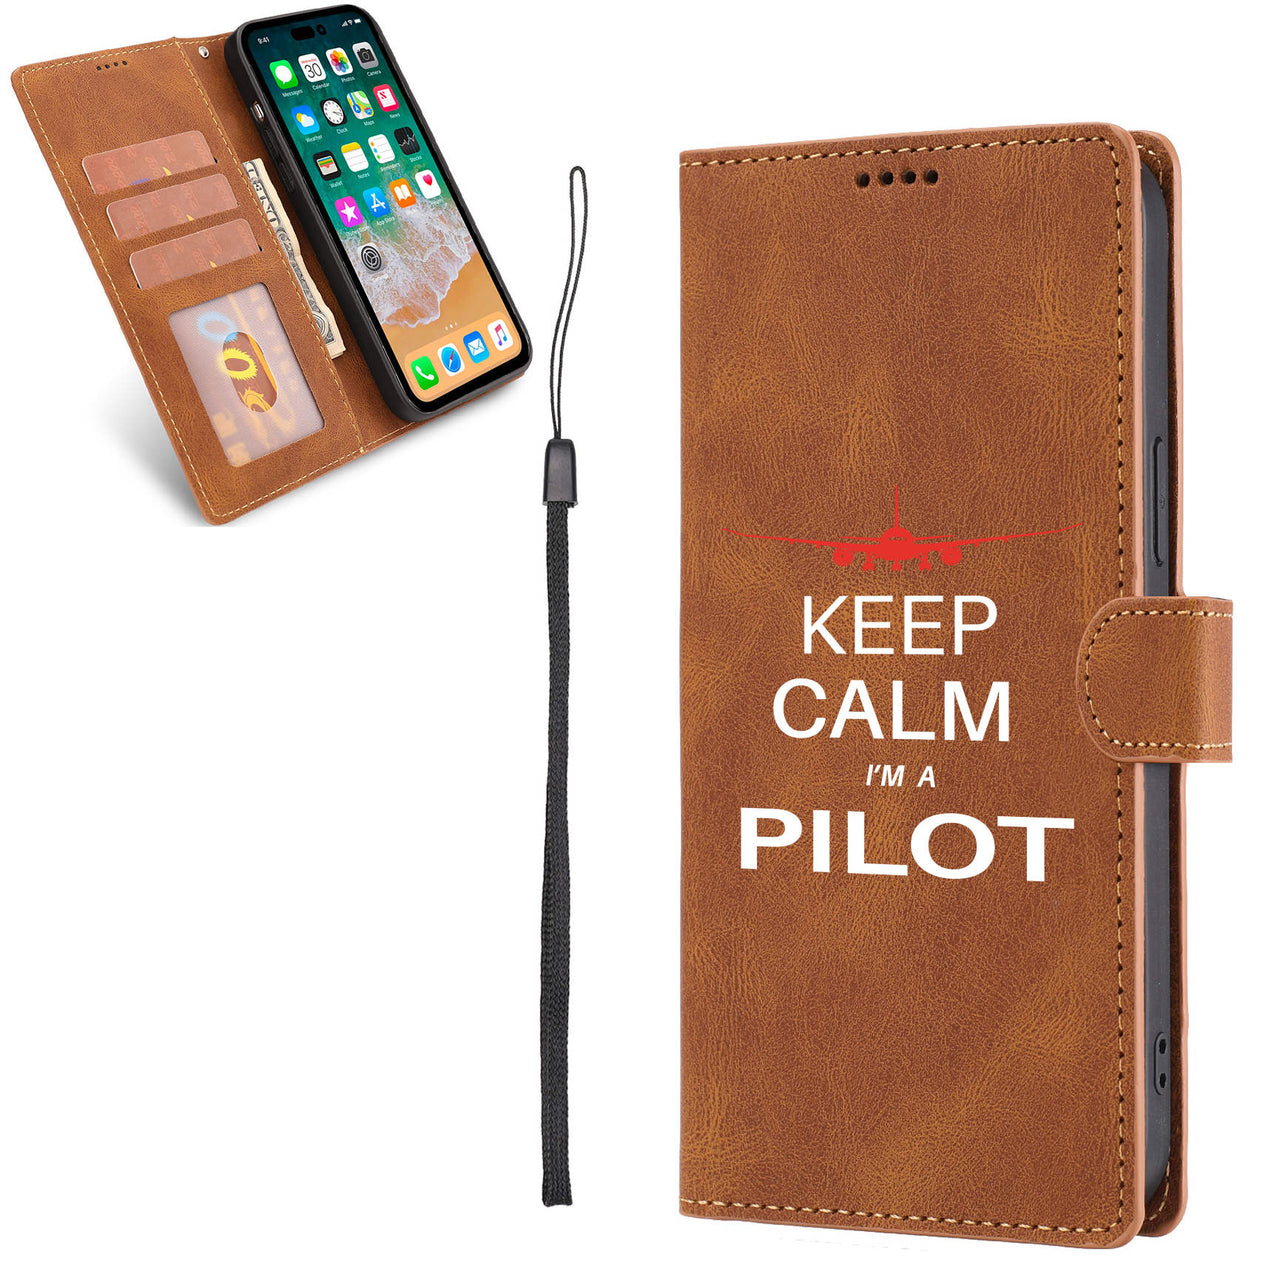 Pilot (777 Silhouette) Designed Leather iPhone Cases